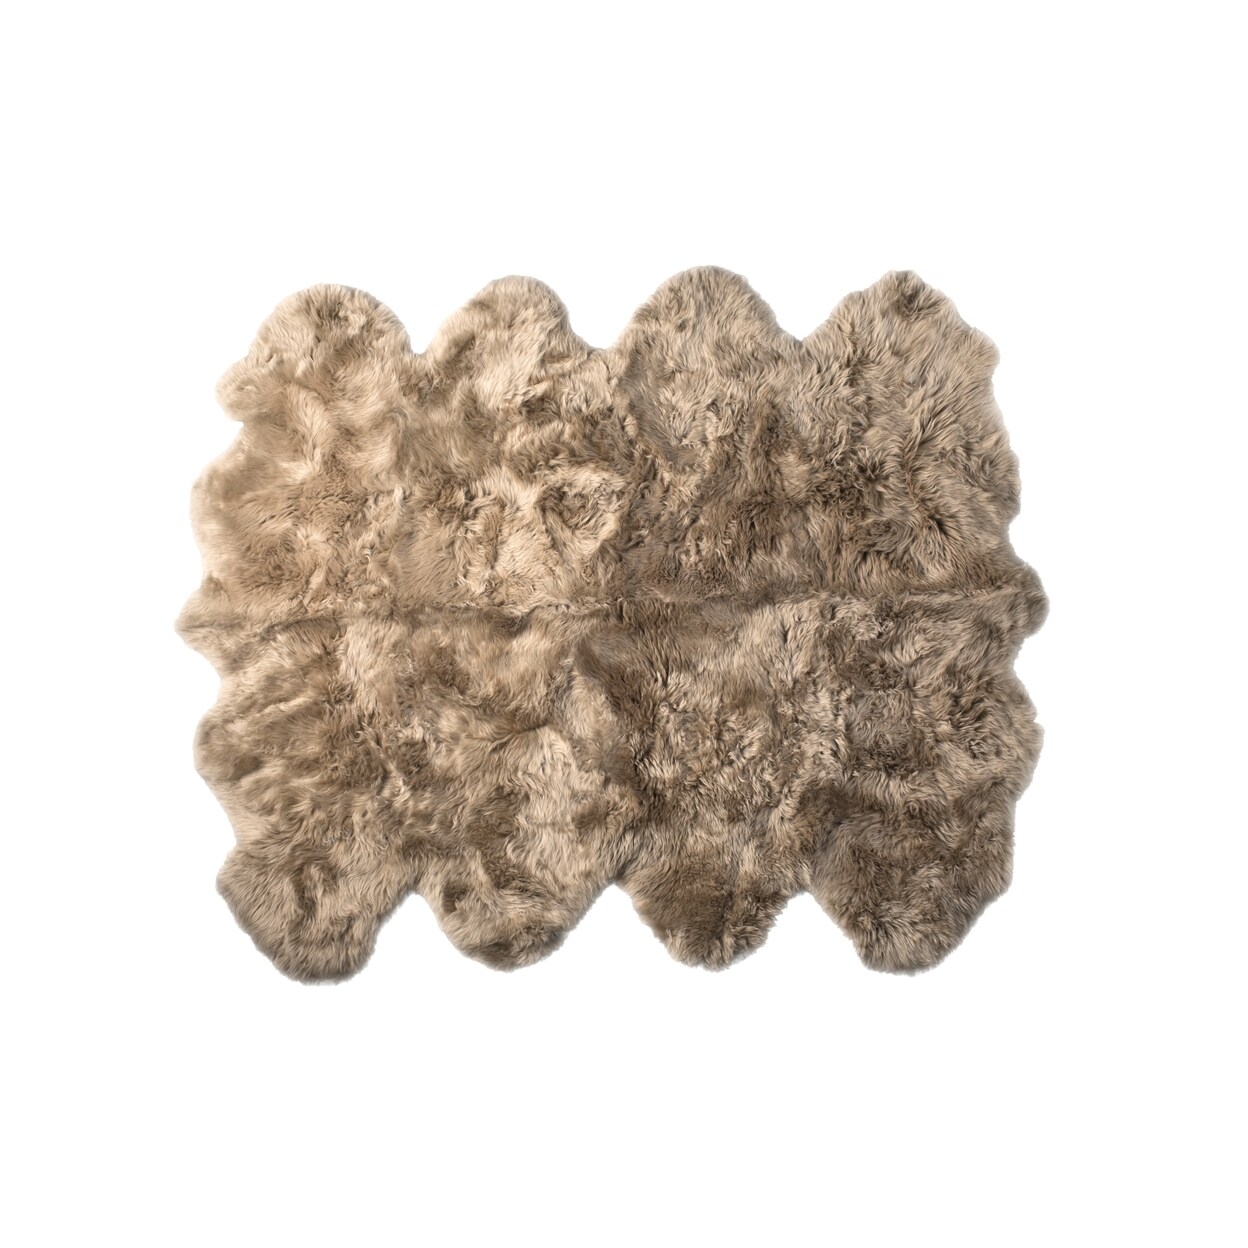 Natural     Zealand Sheepskin Octo Rug  1-Piece  7x6  2